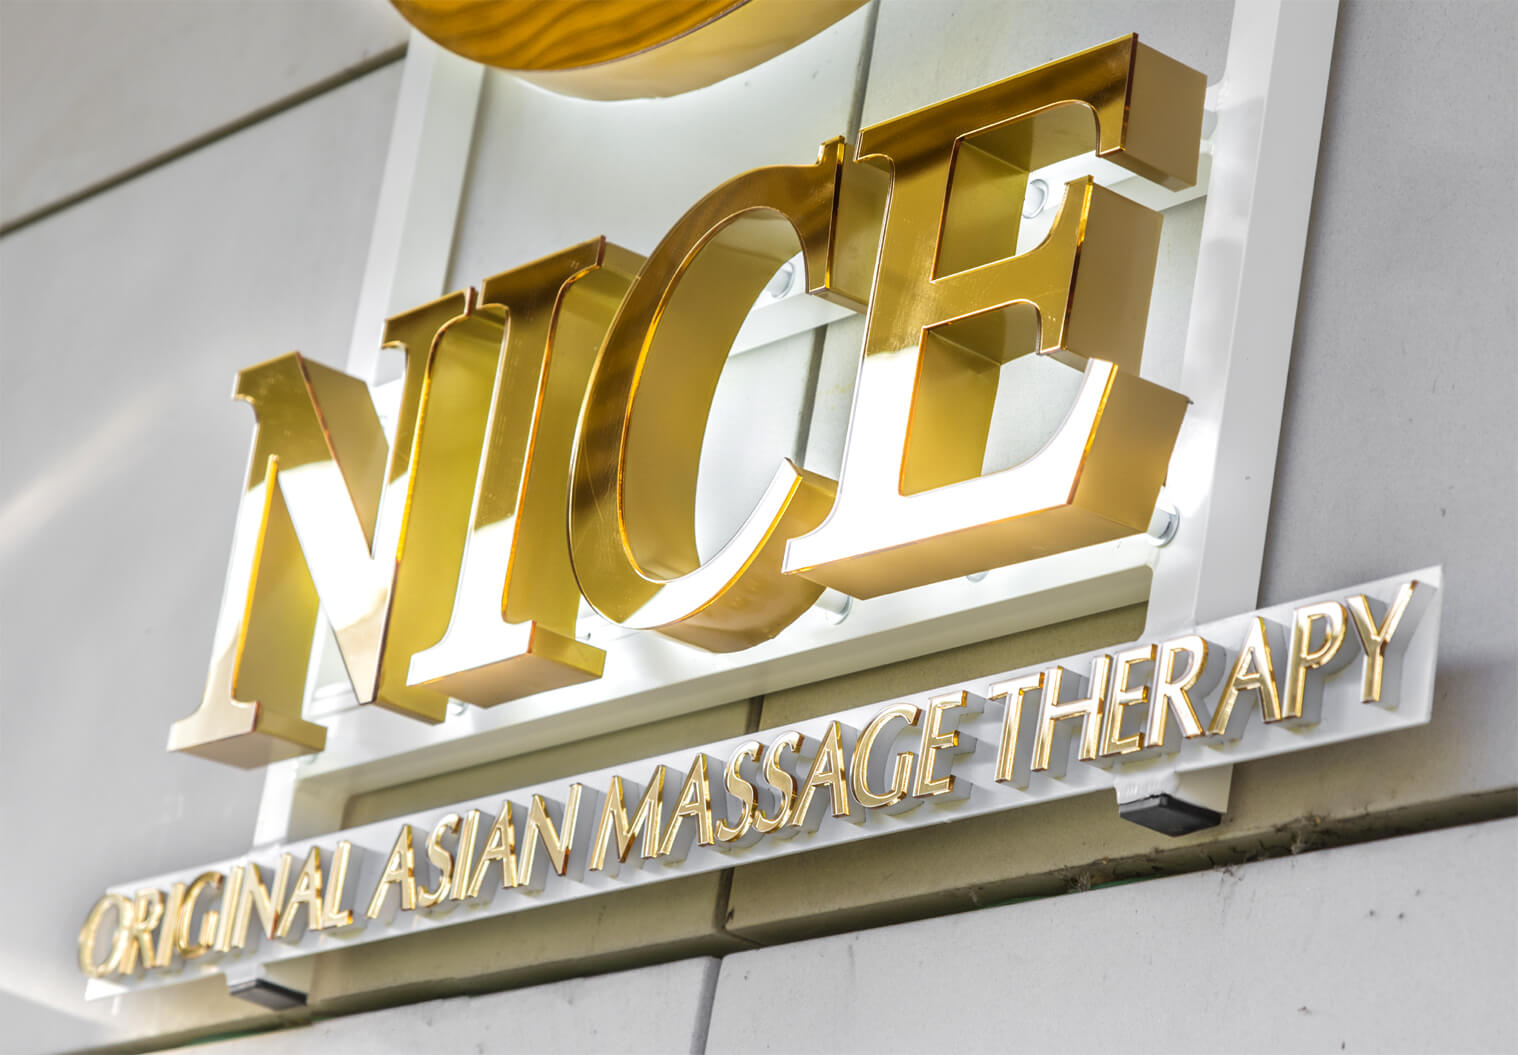 NICE - NICE - logo i litery led świecące